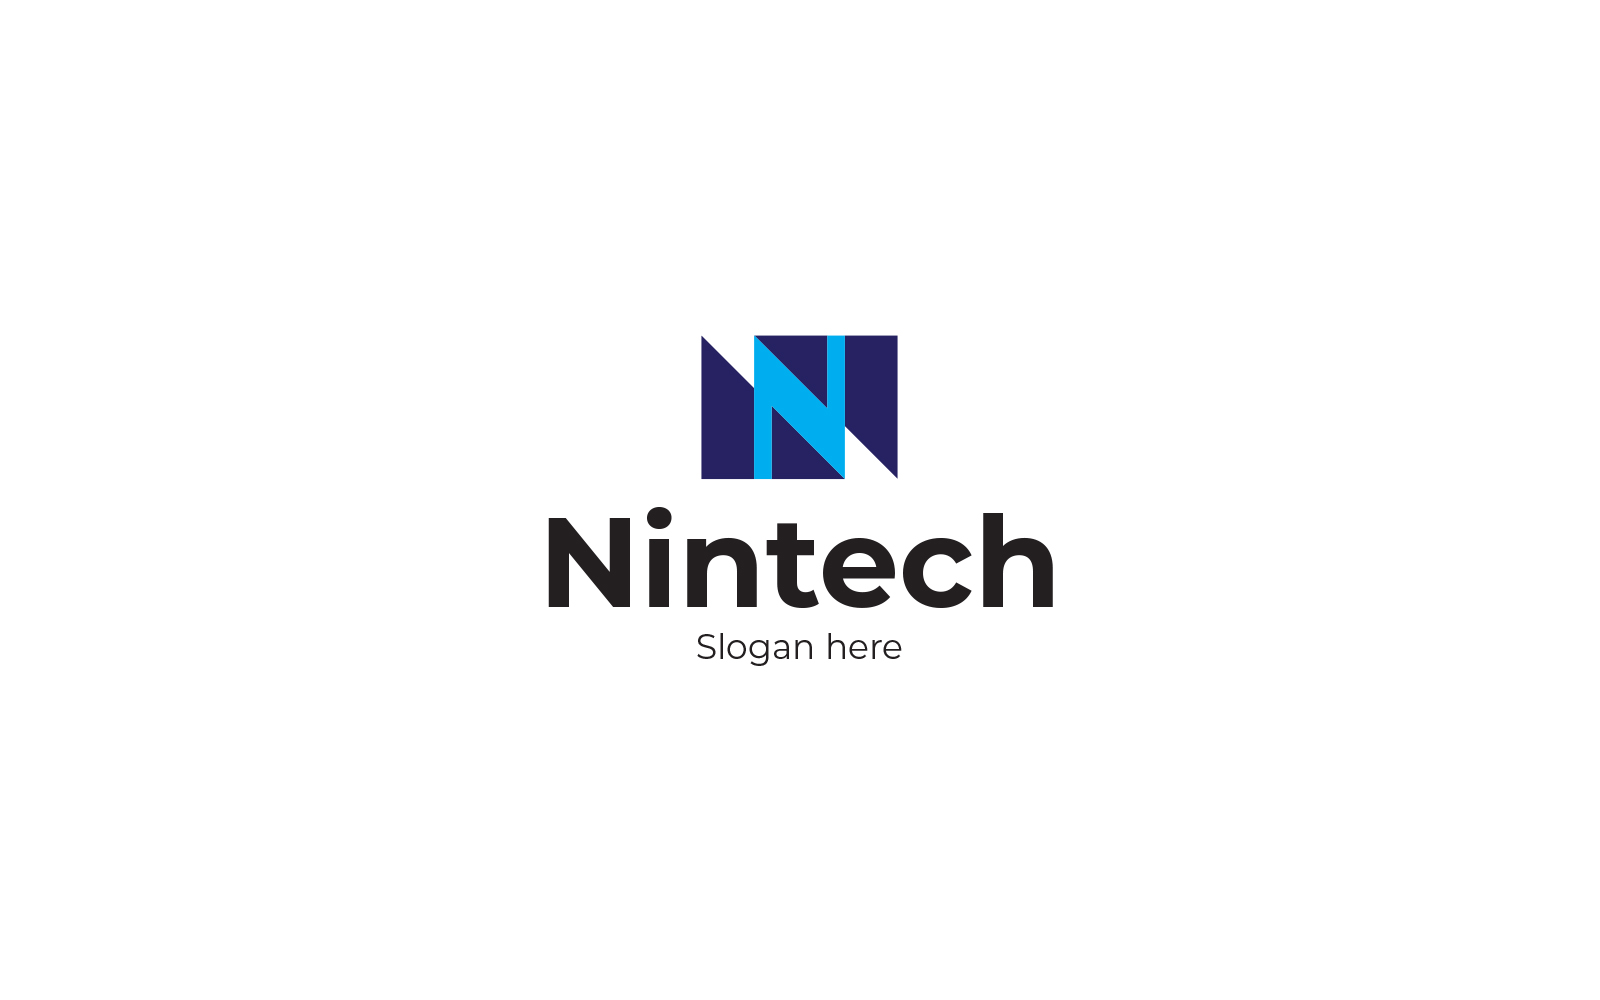 N Nintech Letter Logo Design Template